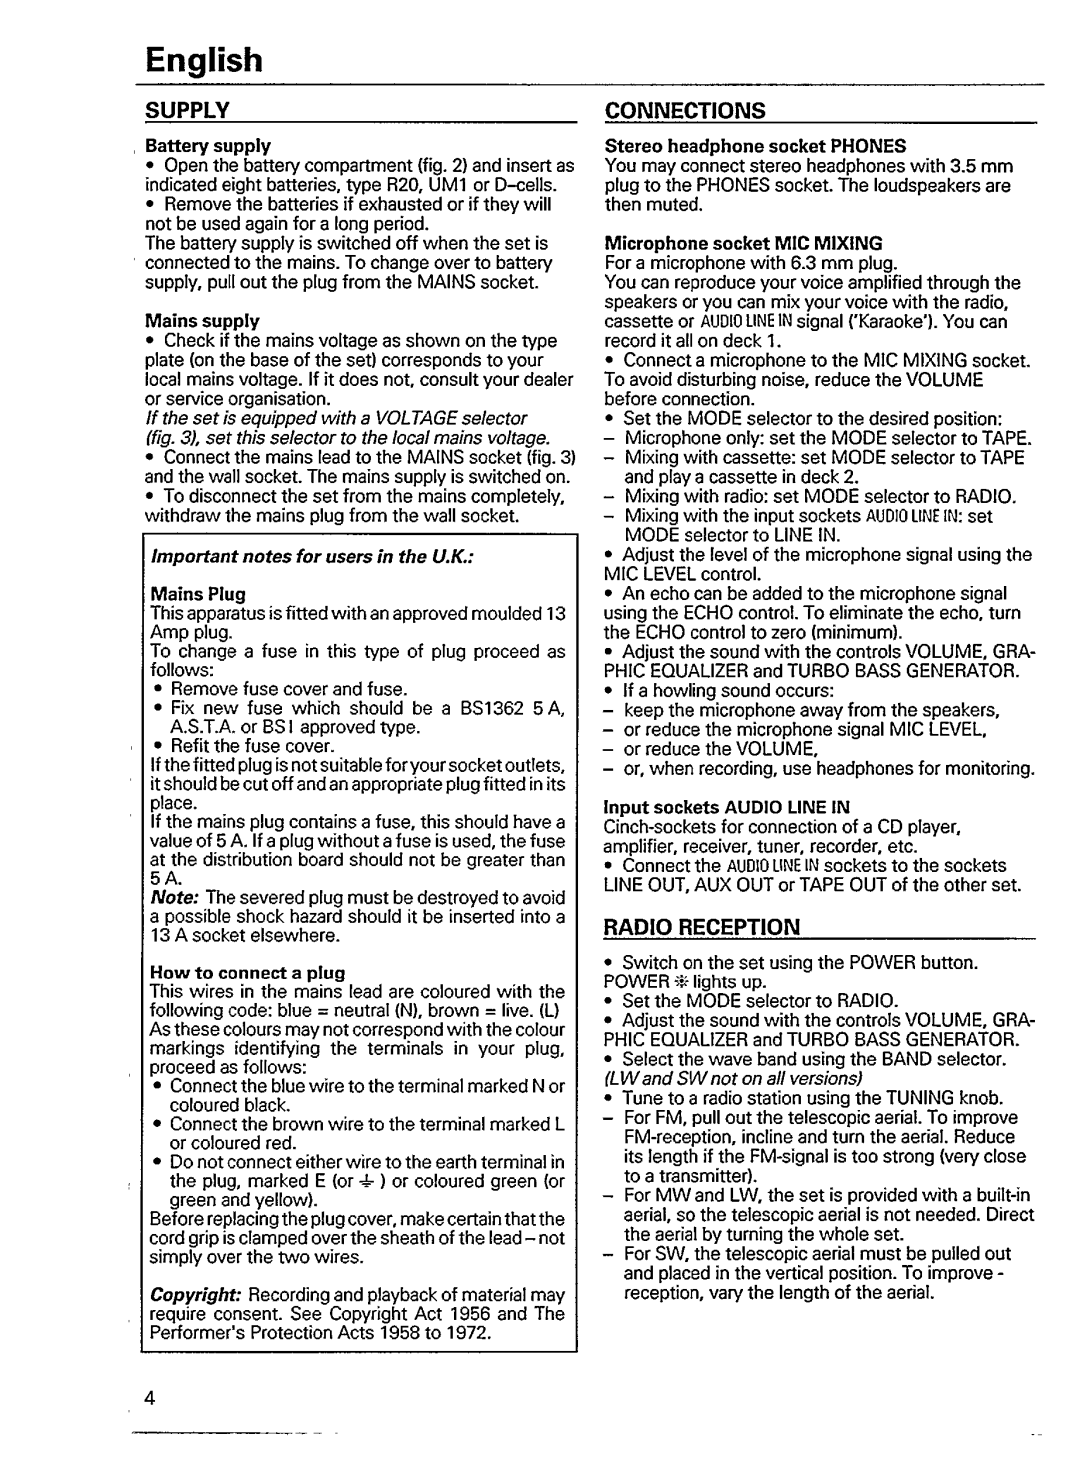 Philips AW 7530 manual 